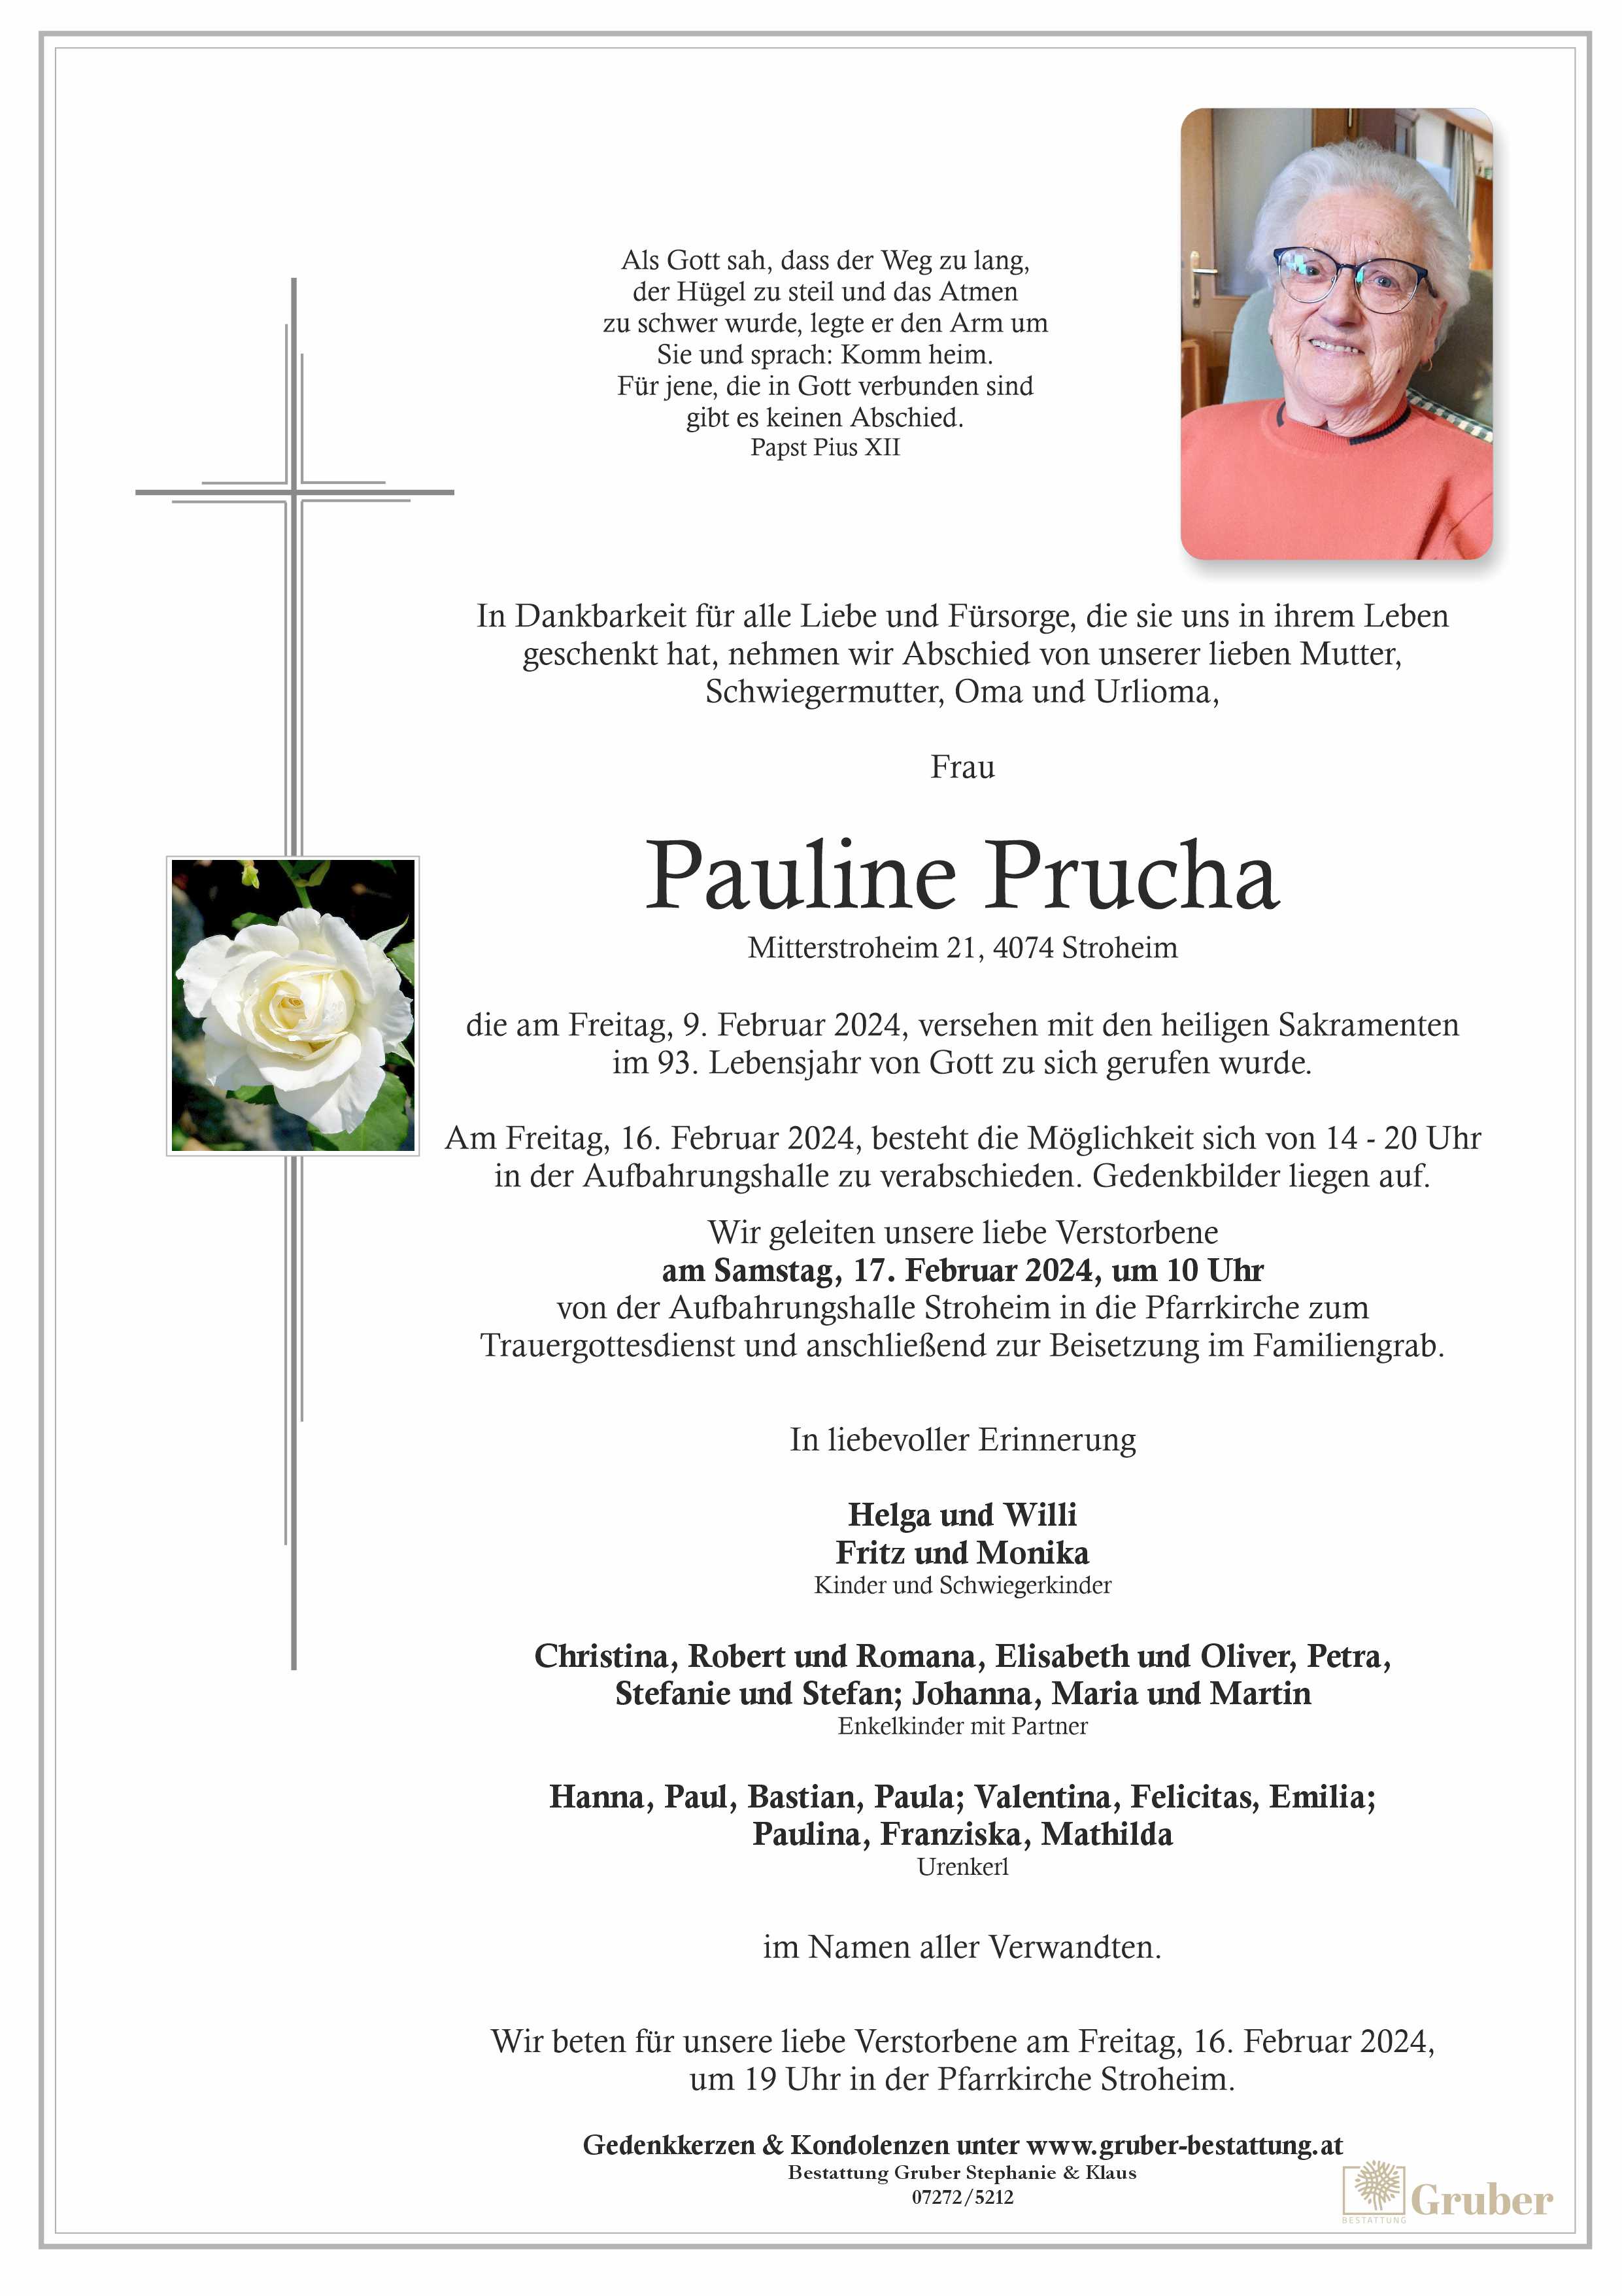 Pauline Prucha (Stroheim)